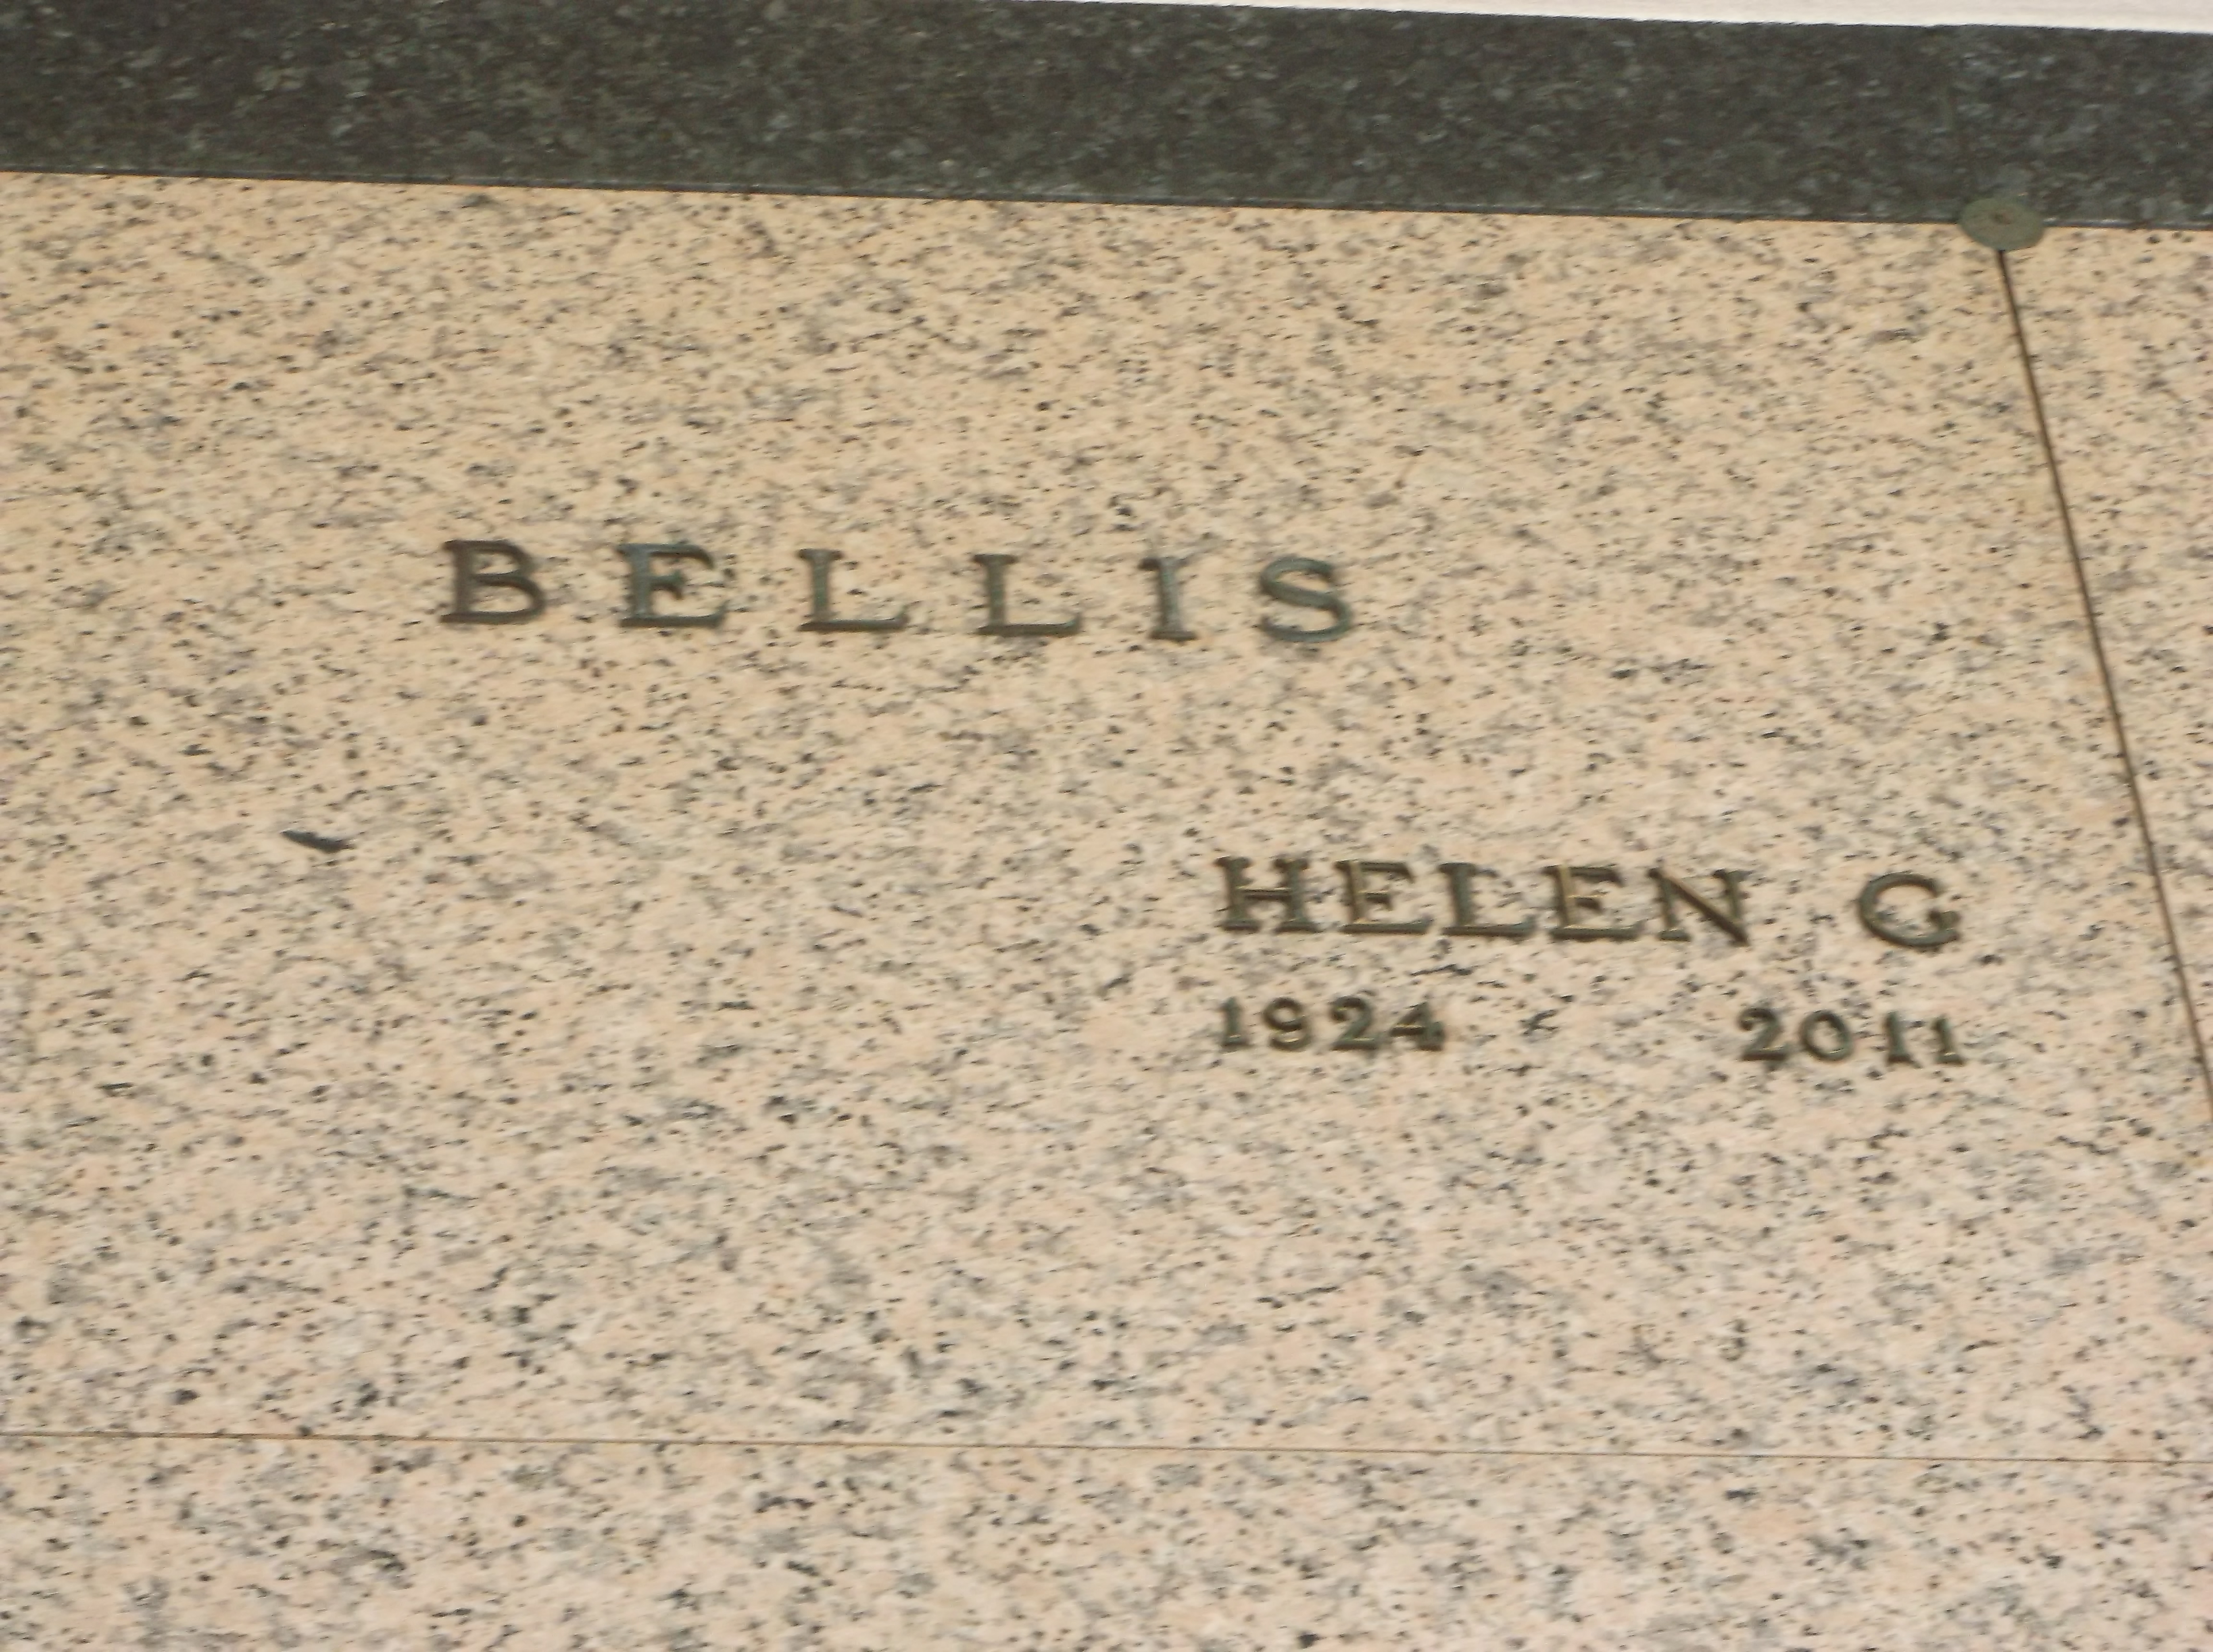 Helen G Bellis